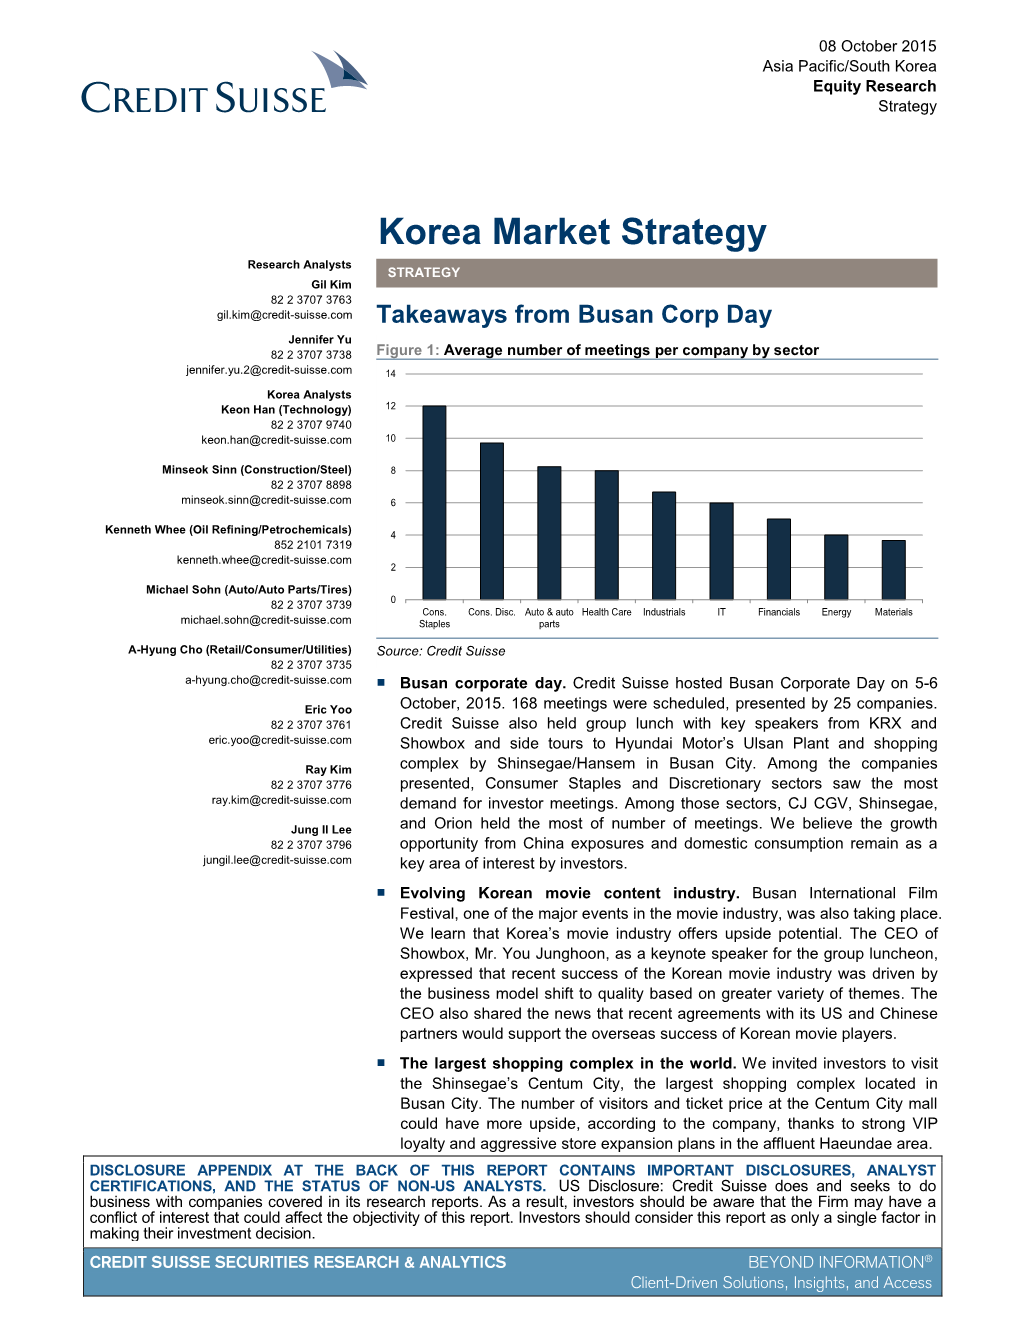 Korea Market Strategy Research Analysts STRATEGY